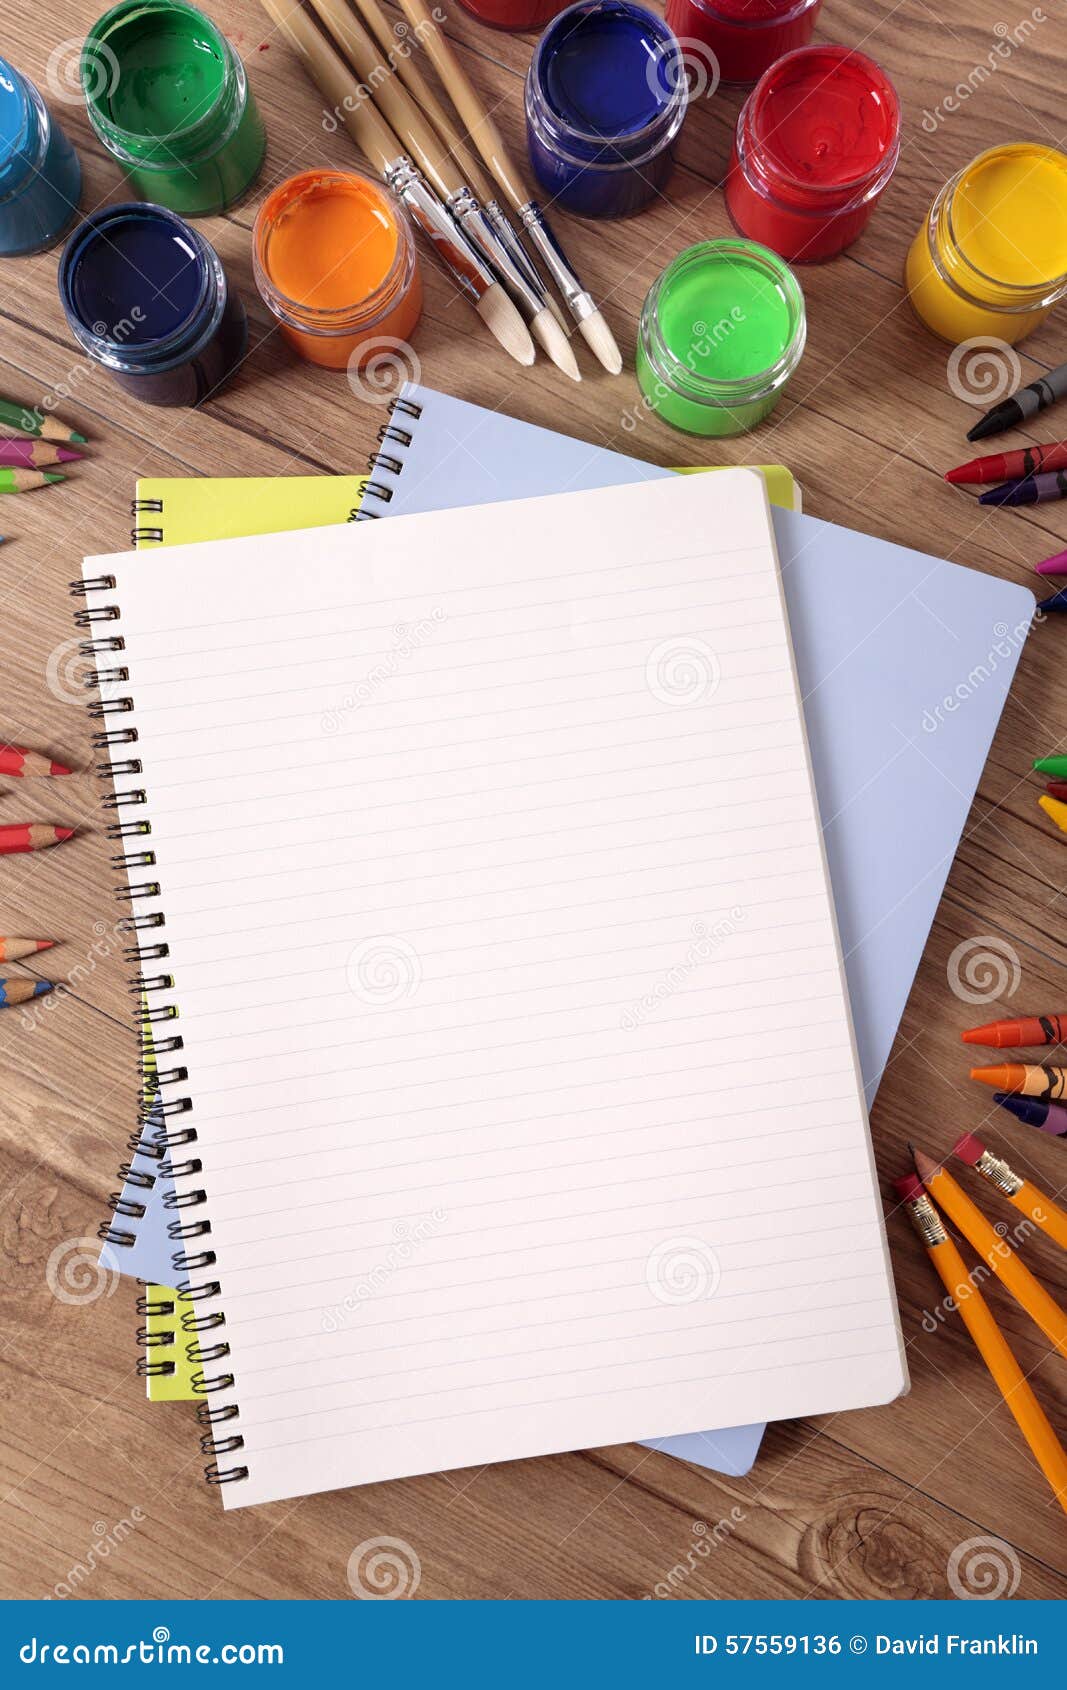 https://thumbs.dreamstime.com/z/school-art-supplies-blank-writing-book-desk-copy-space-vertical-white-open-notebook-various-paints-pencils-crayons-57559136.jpg